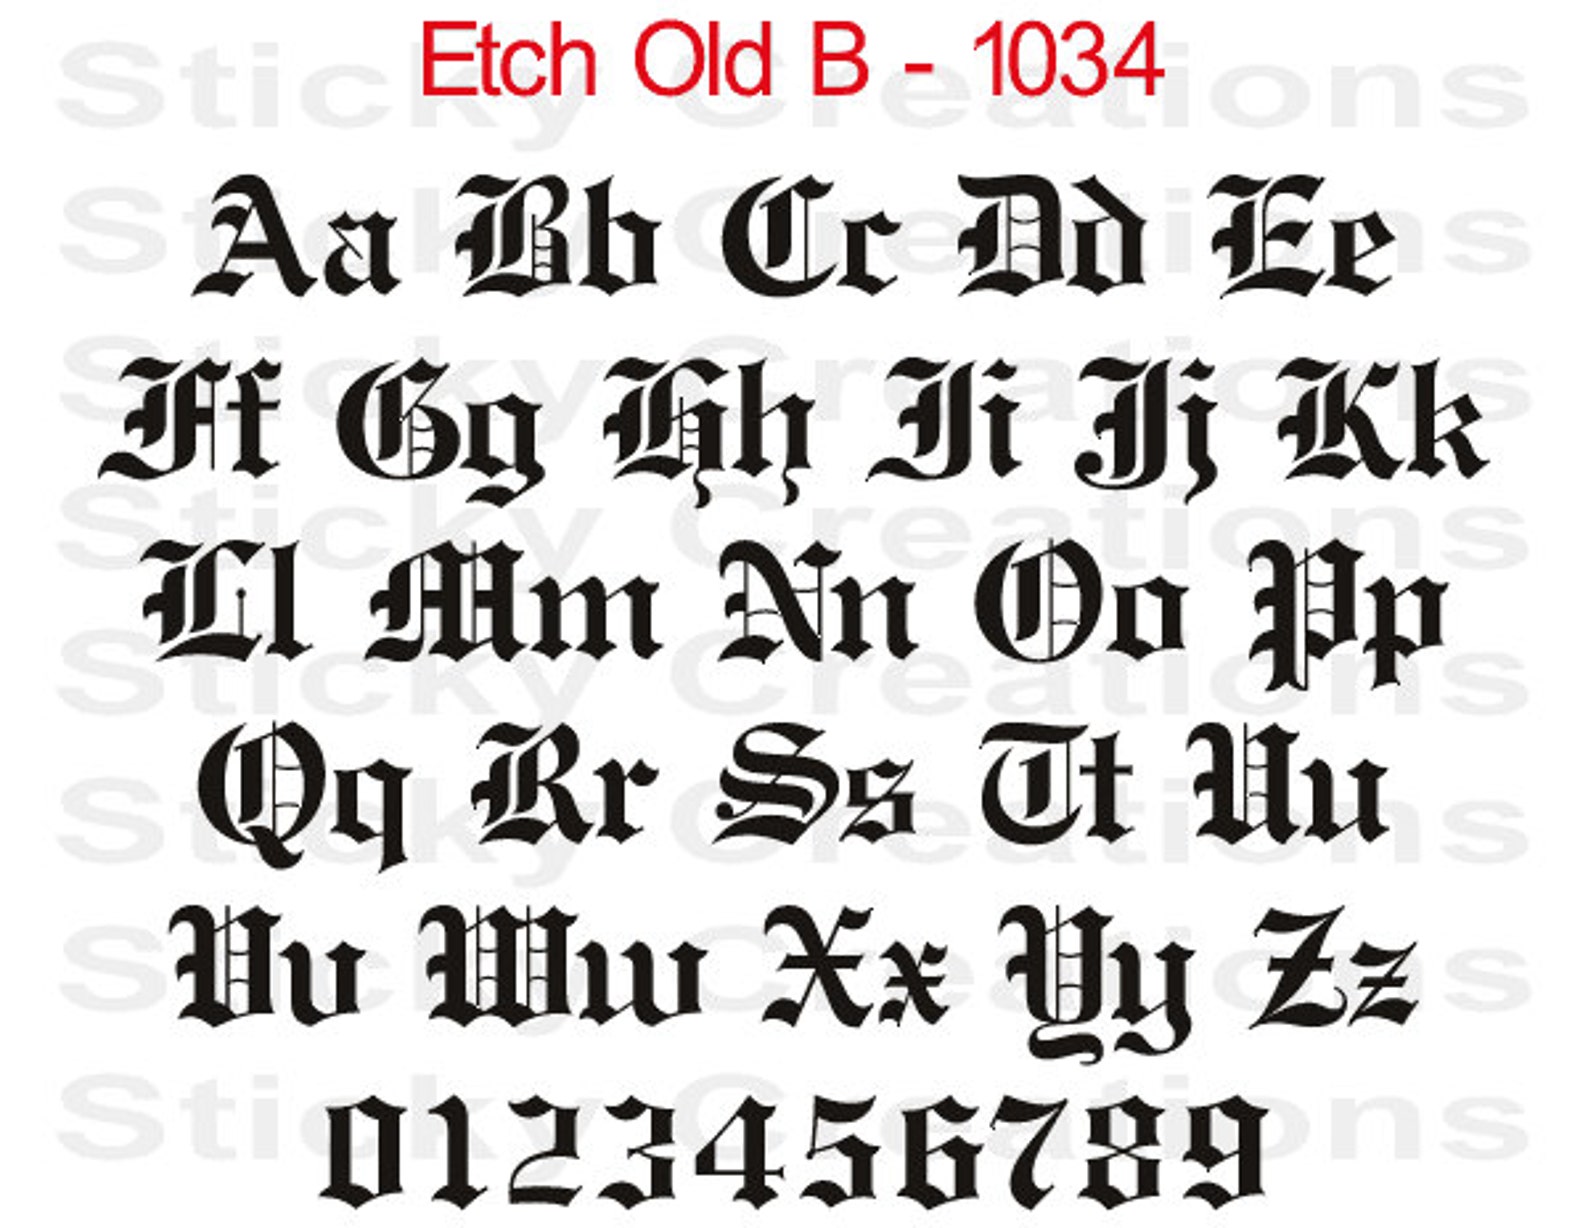 Шрифт old english. Old English шрифт. Old English text шрифт. Old English text MT шрифт. Old England шрифт.